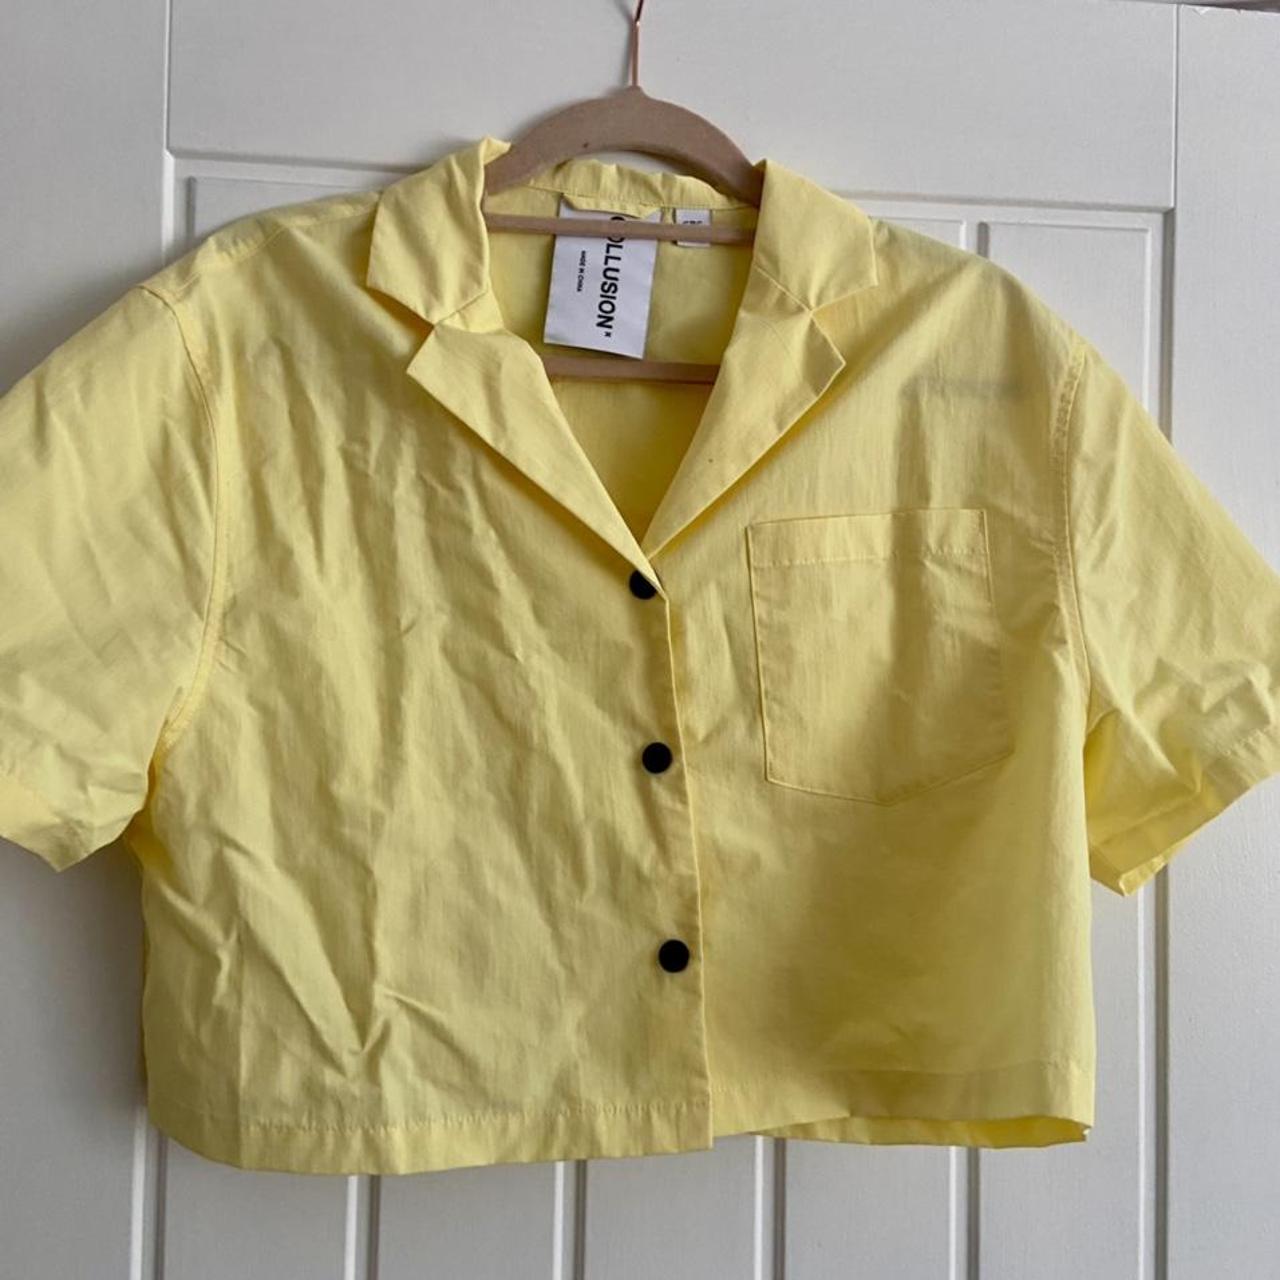 ASOS Women's Yellow and Cream Shirt | Depop